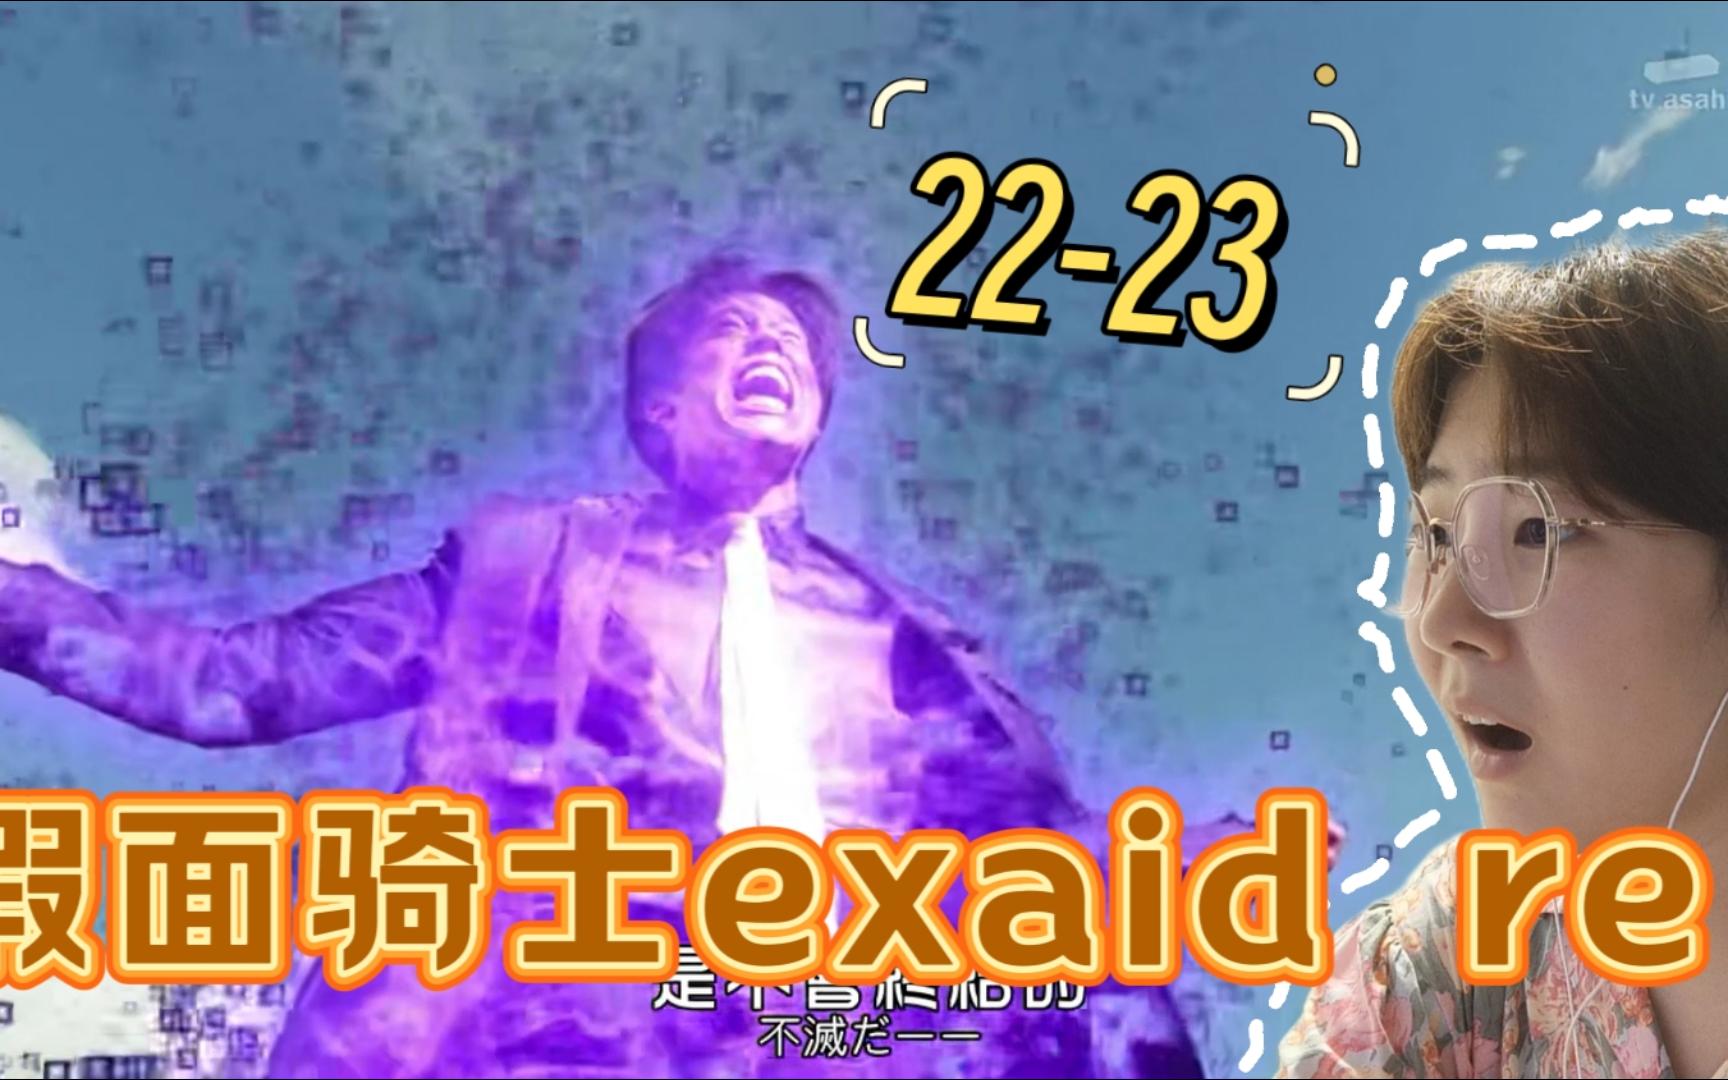 【EXAID REACTION】22-23 影帝game over了？？？？？？第一次看假面骑士艾克赛德！！！